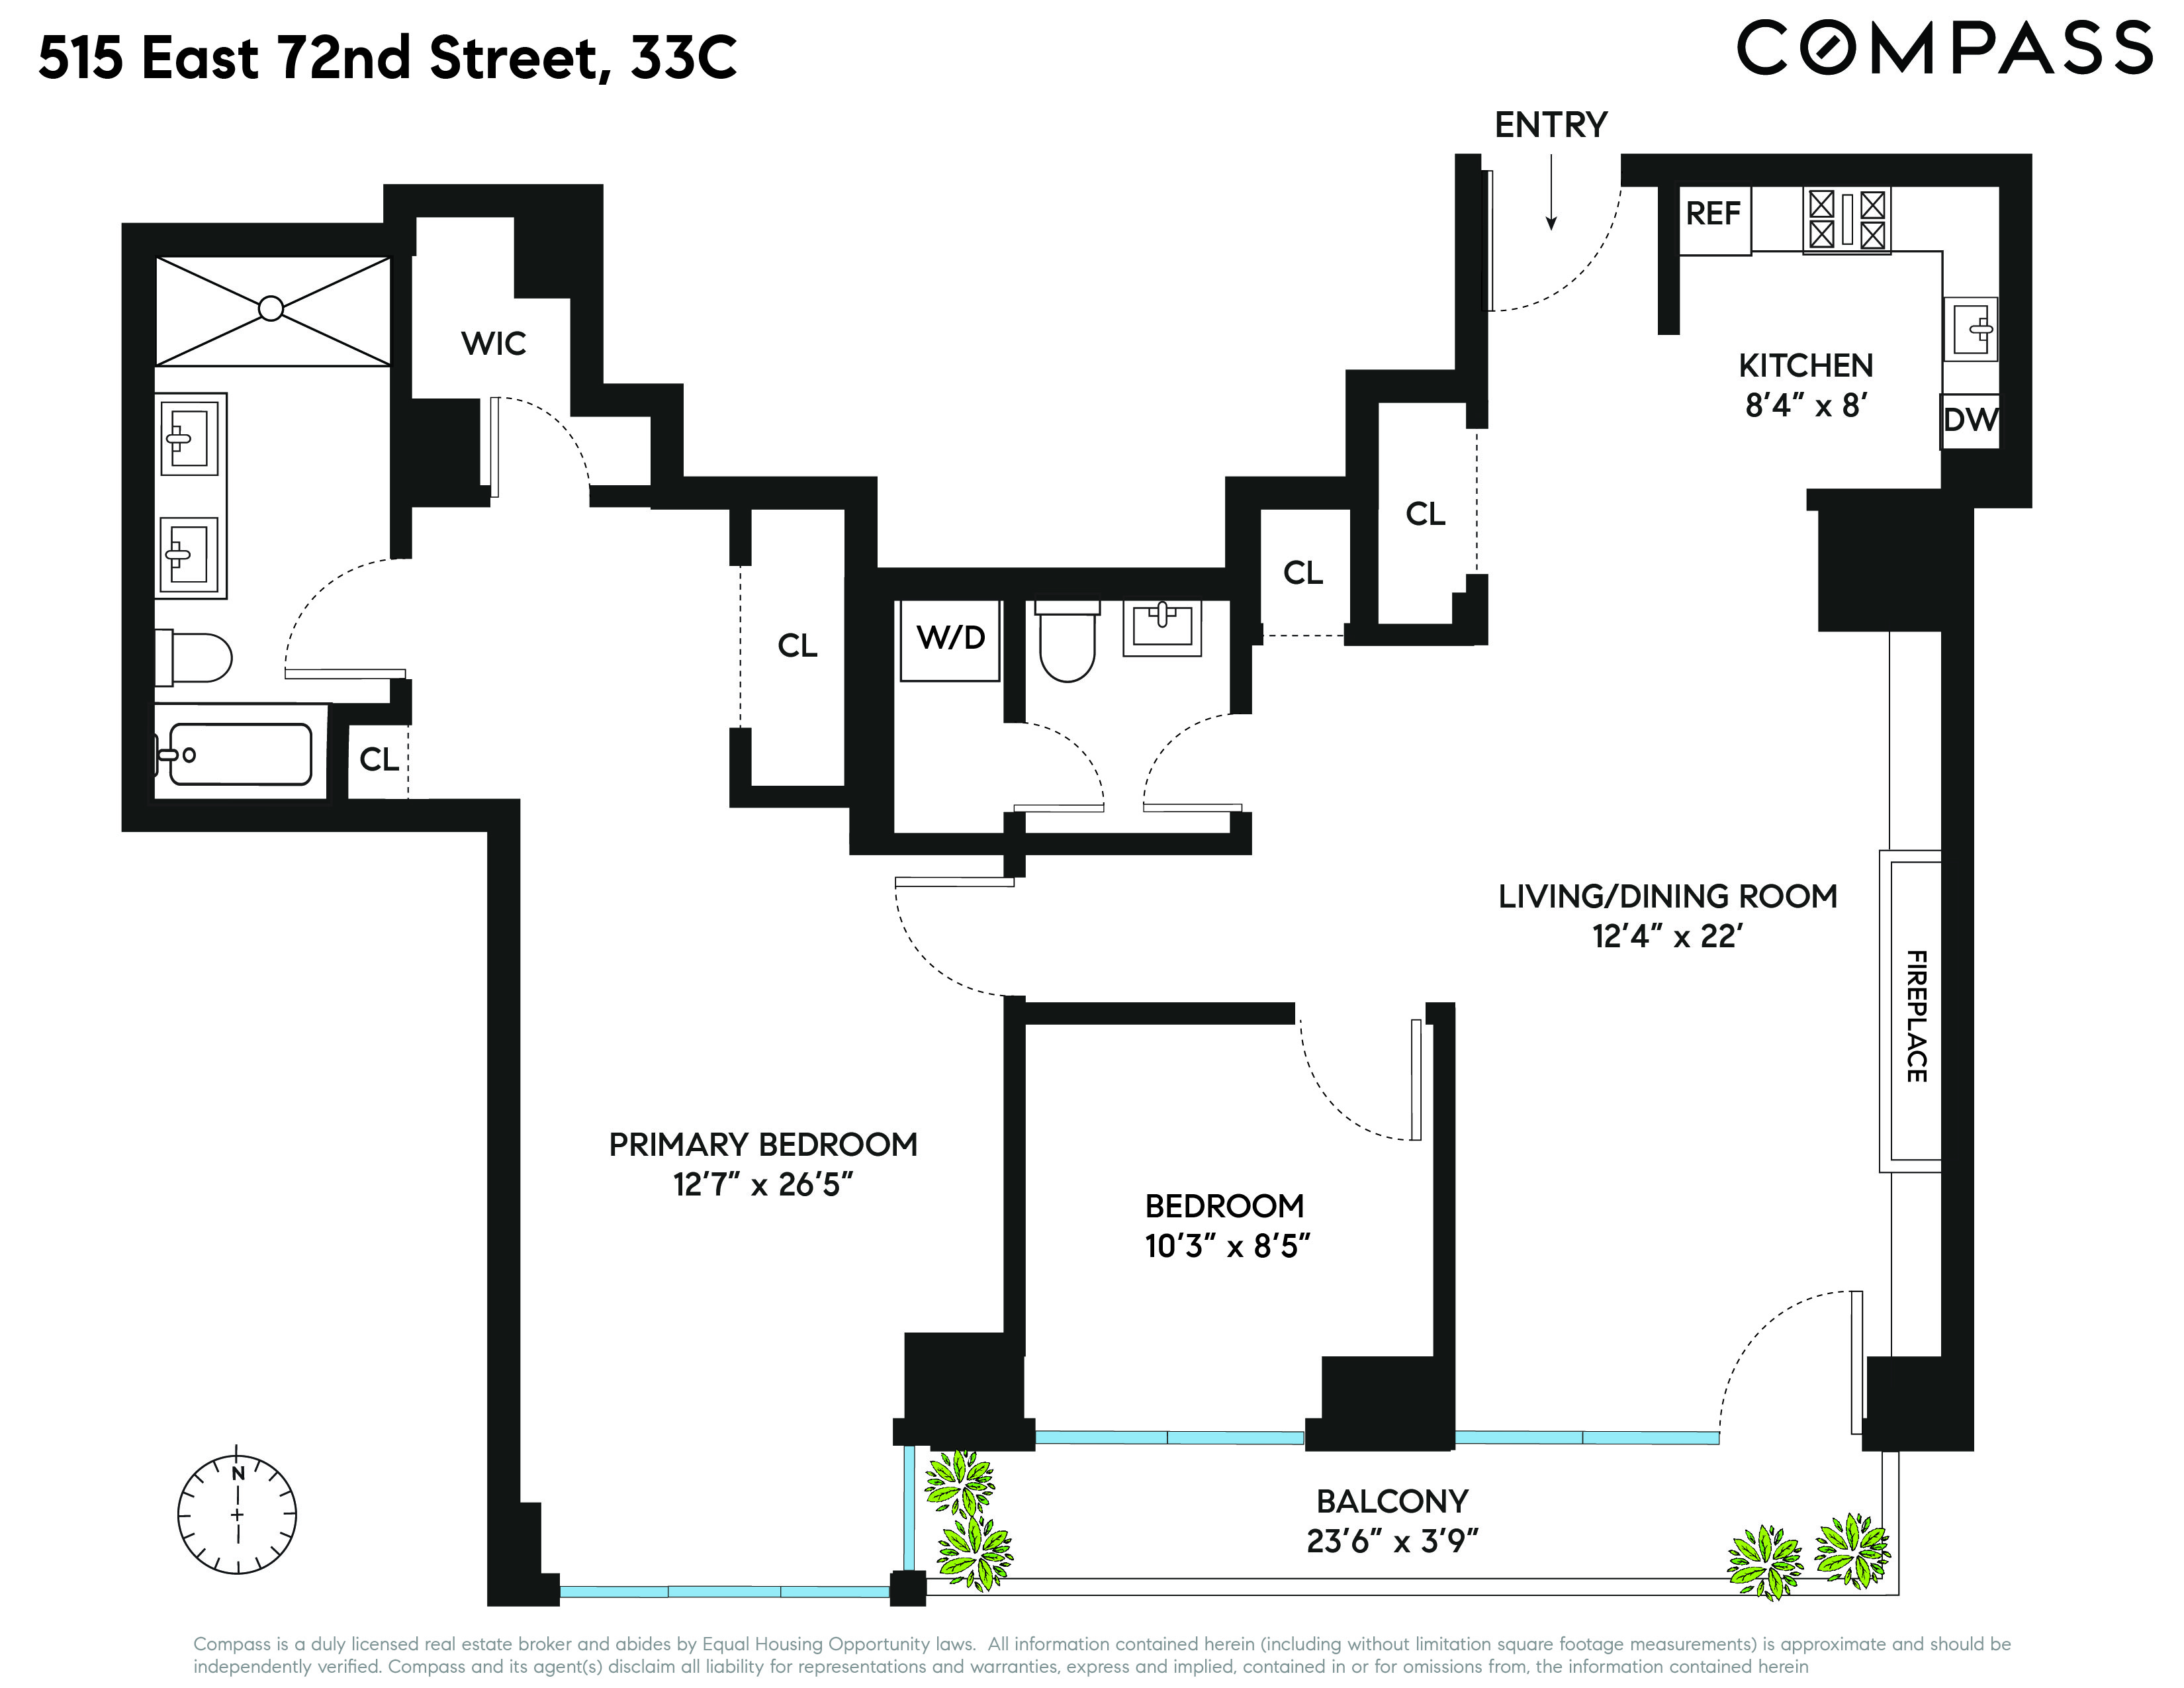 Floorplan for 515 East 72nd Street, 33C